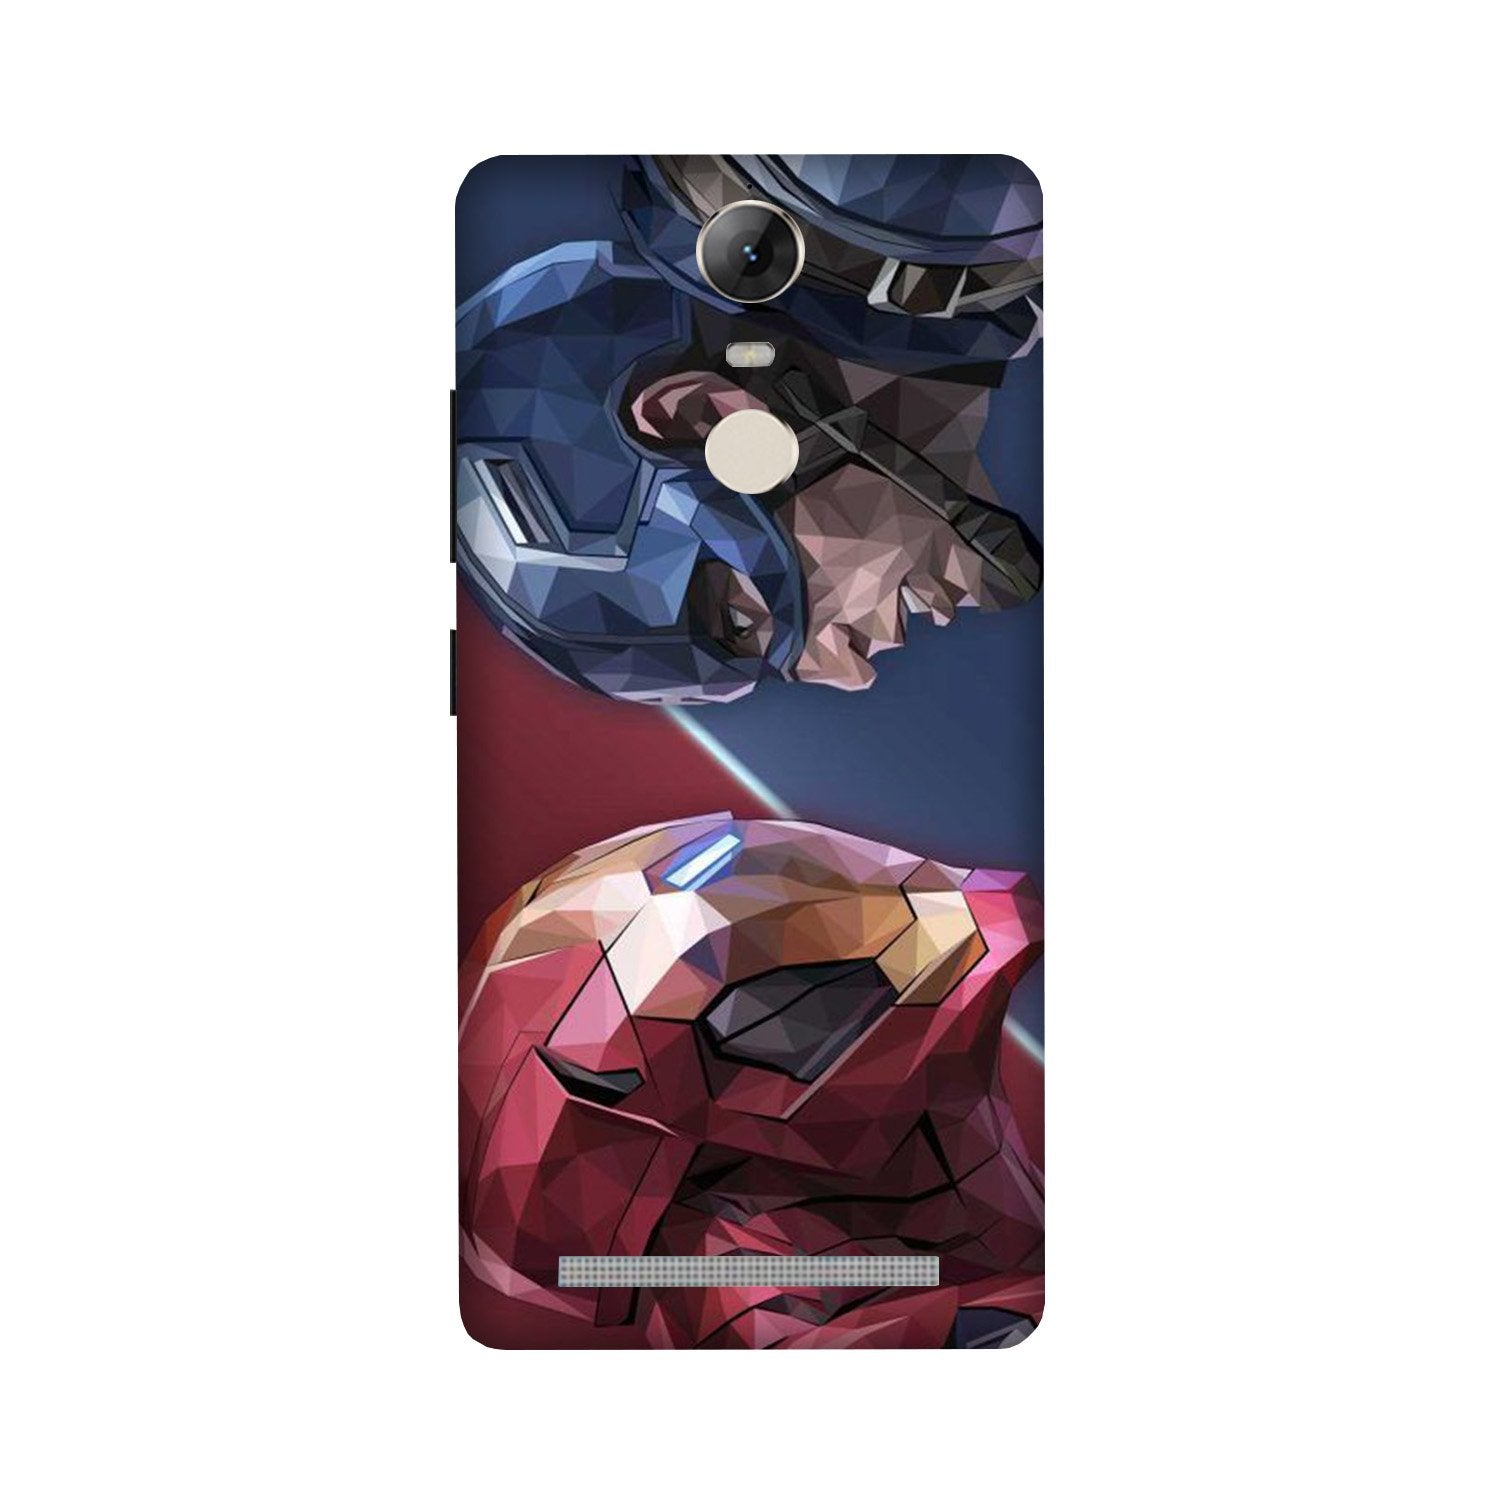 Ironman Captain America Case for Lenovo Vibe K5 Note (Design No. 245)